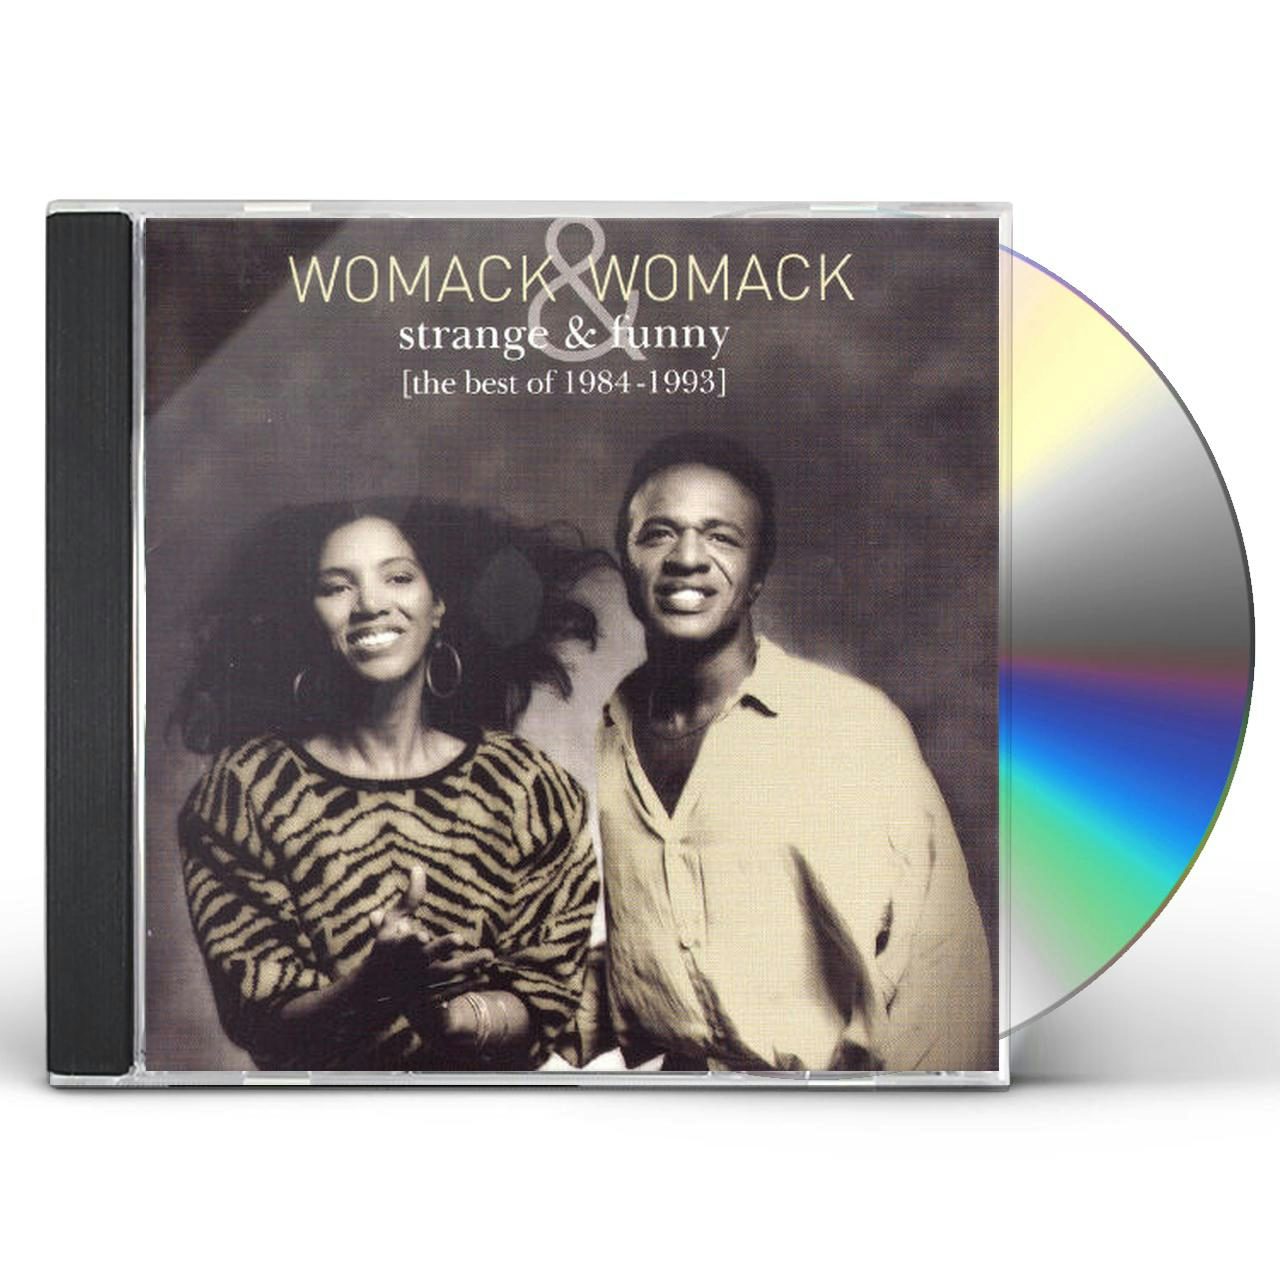 Womack & Womack Store: Official Merch & Vinyl